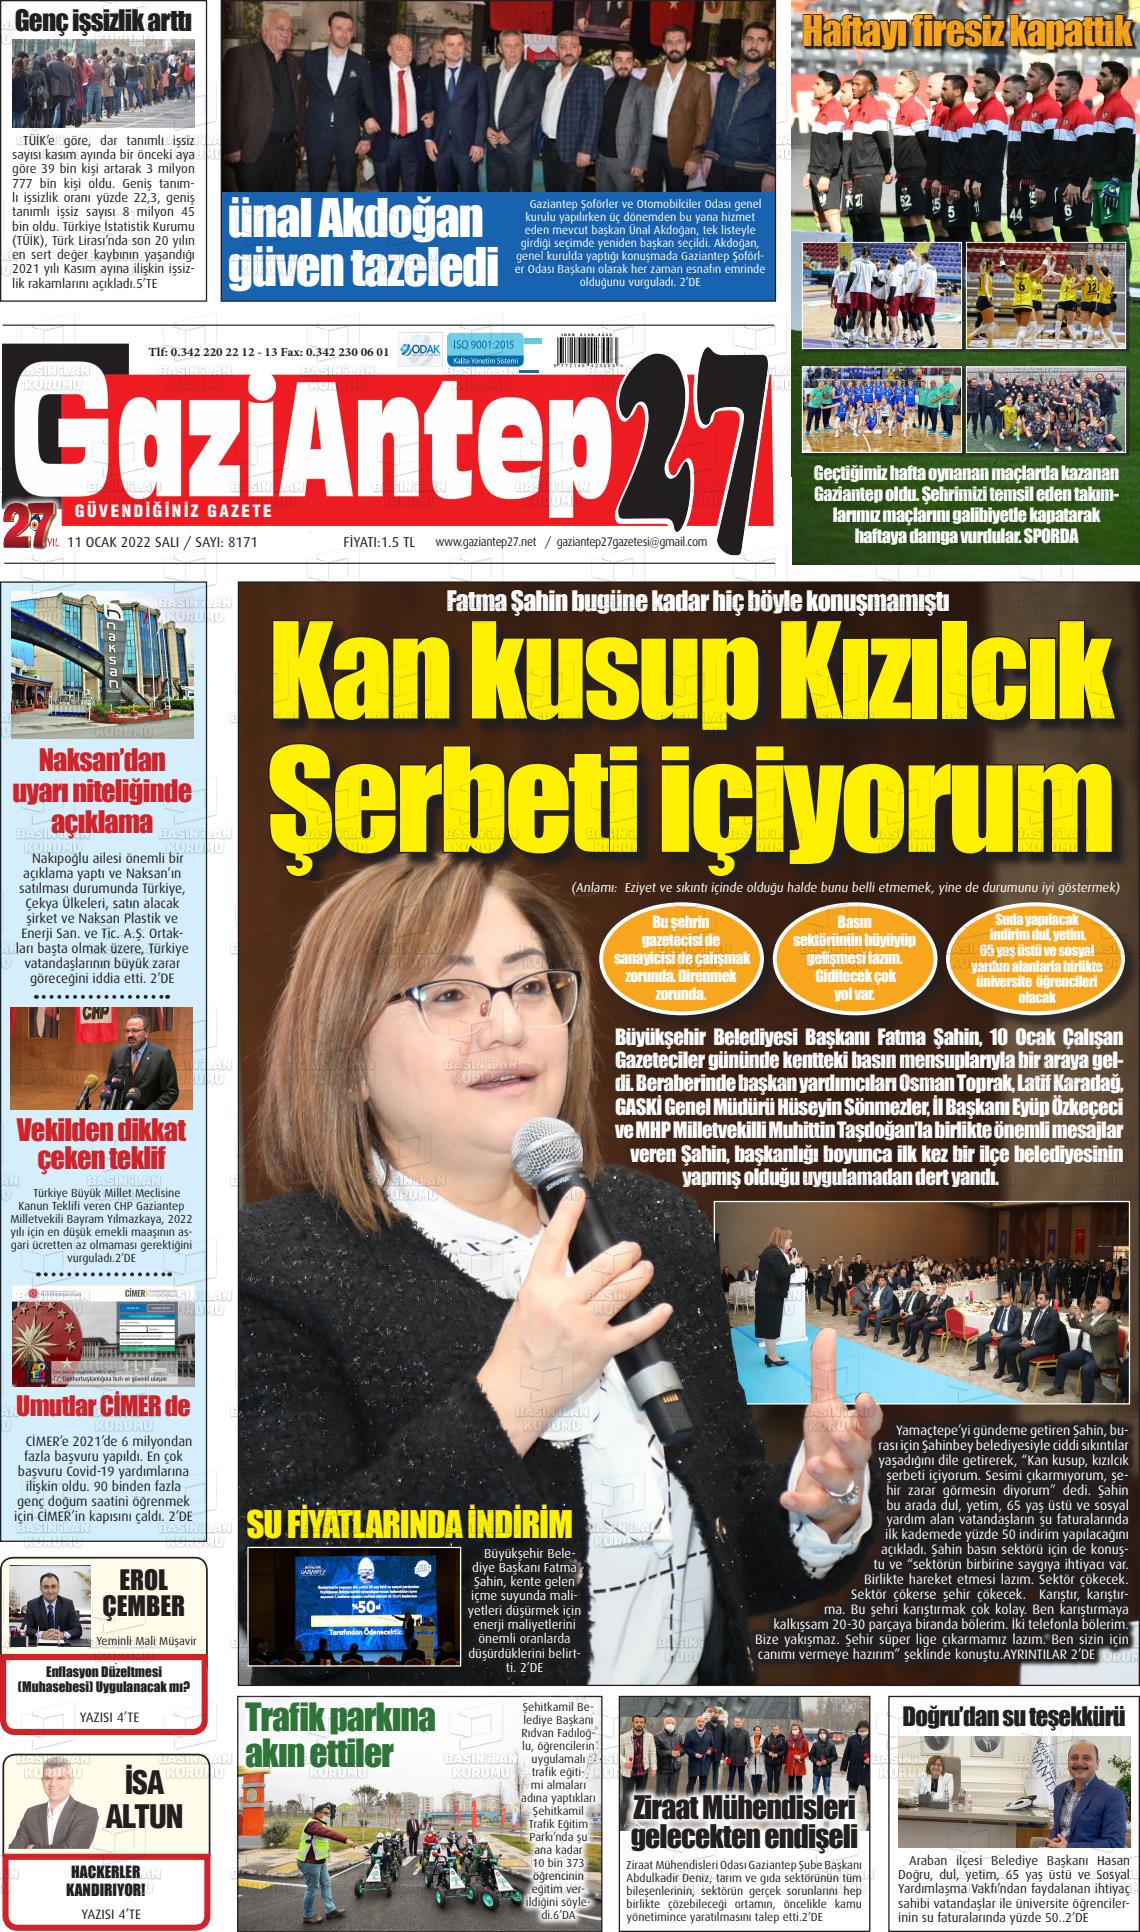 11 Ocak 2022 Gaziantep 27 Gazete Manşeti